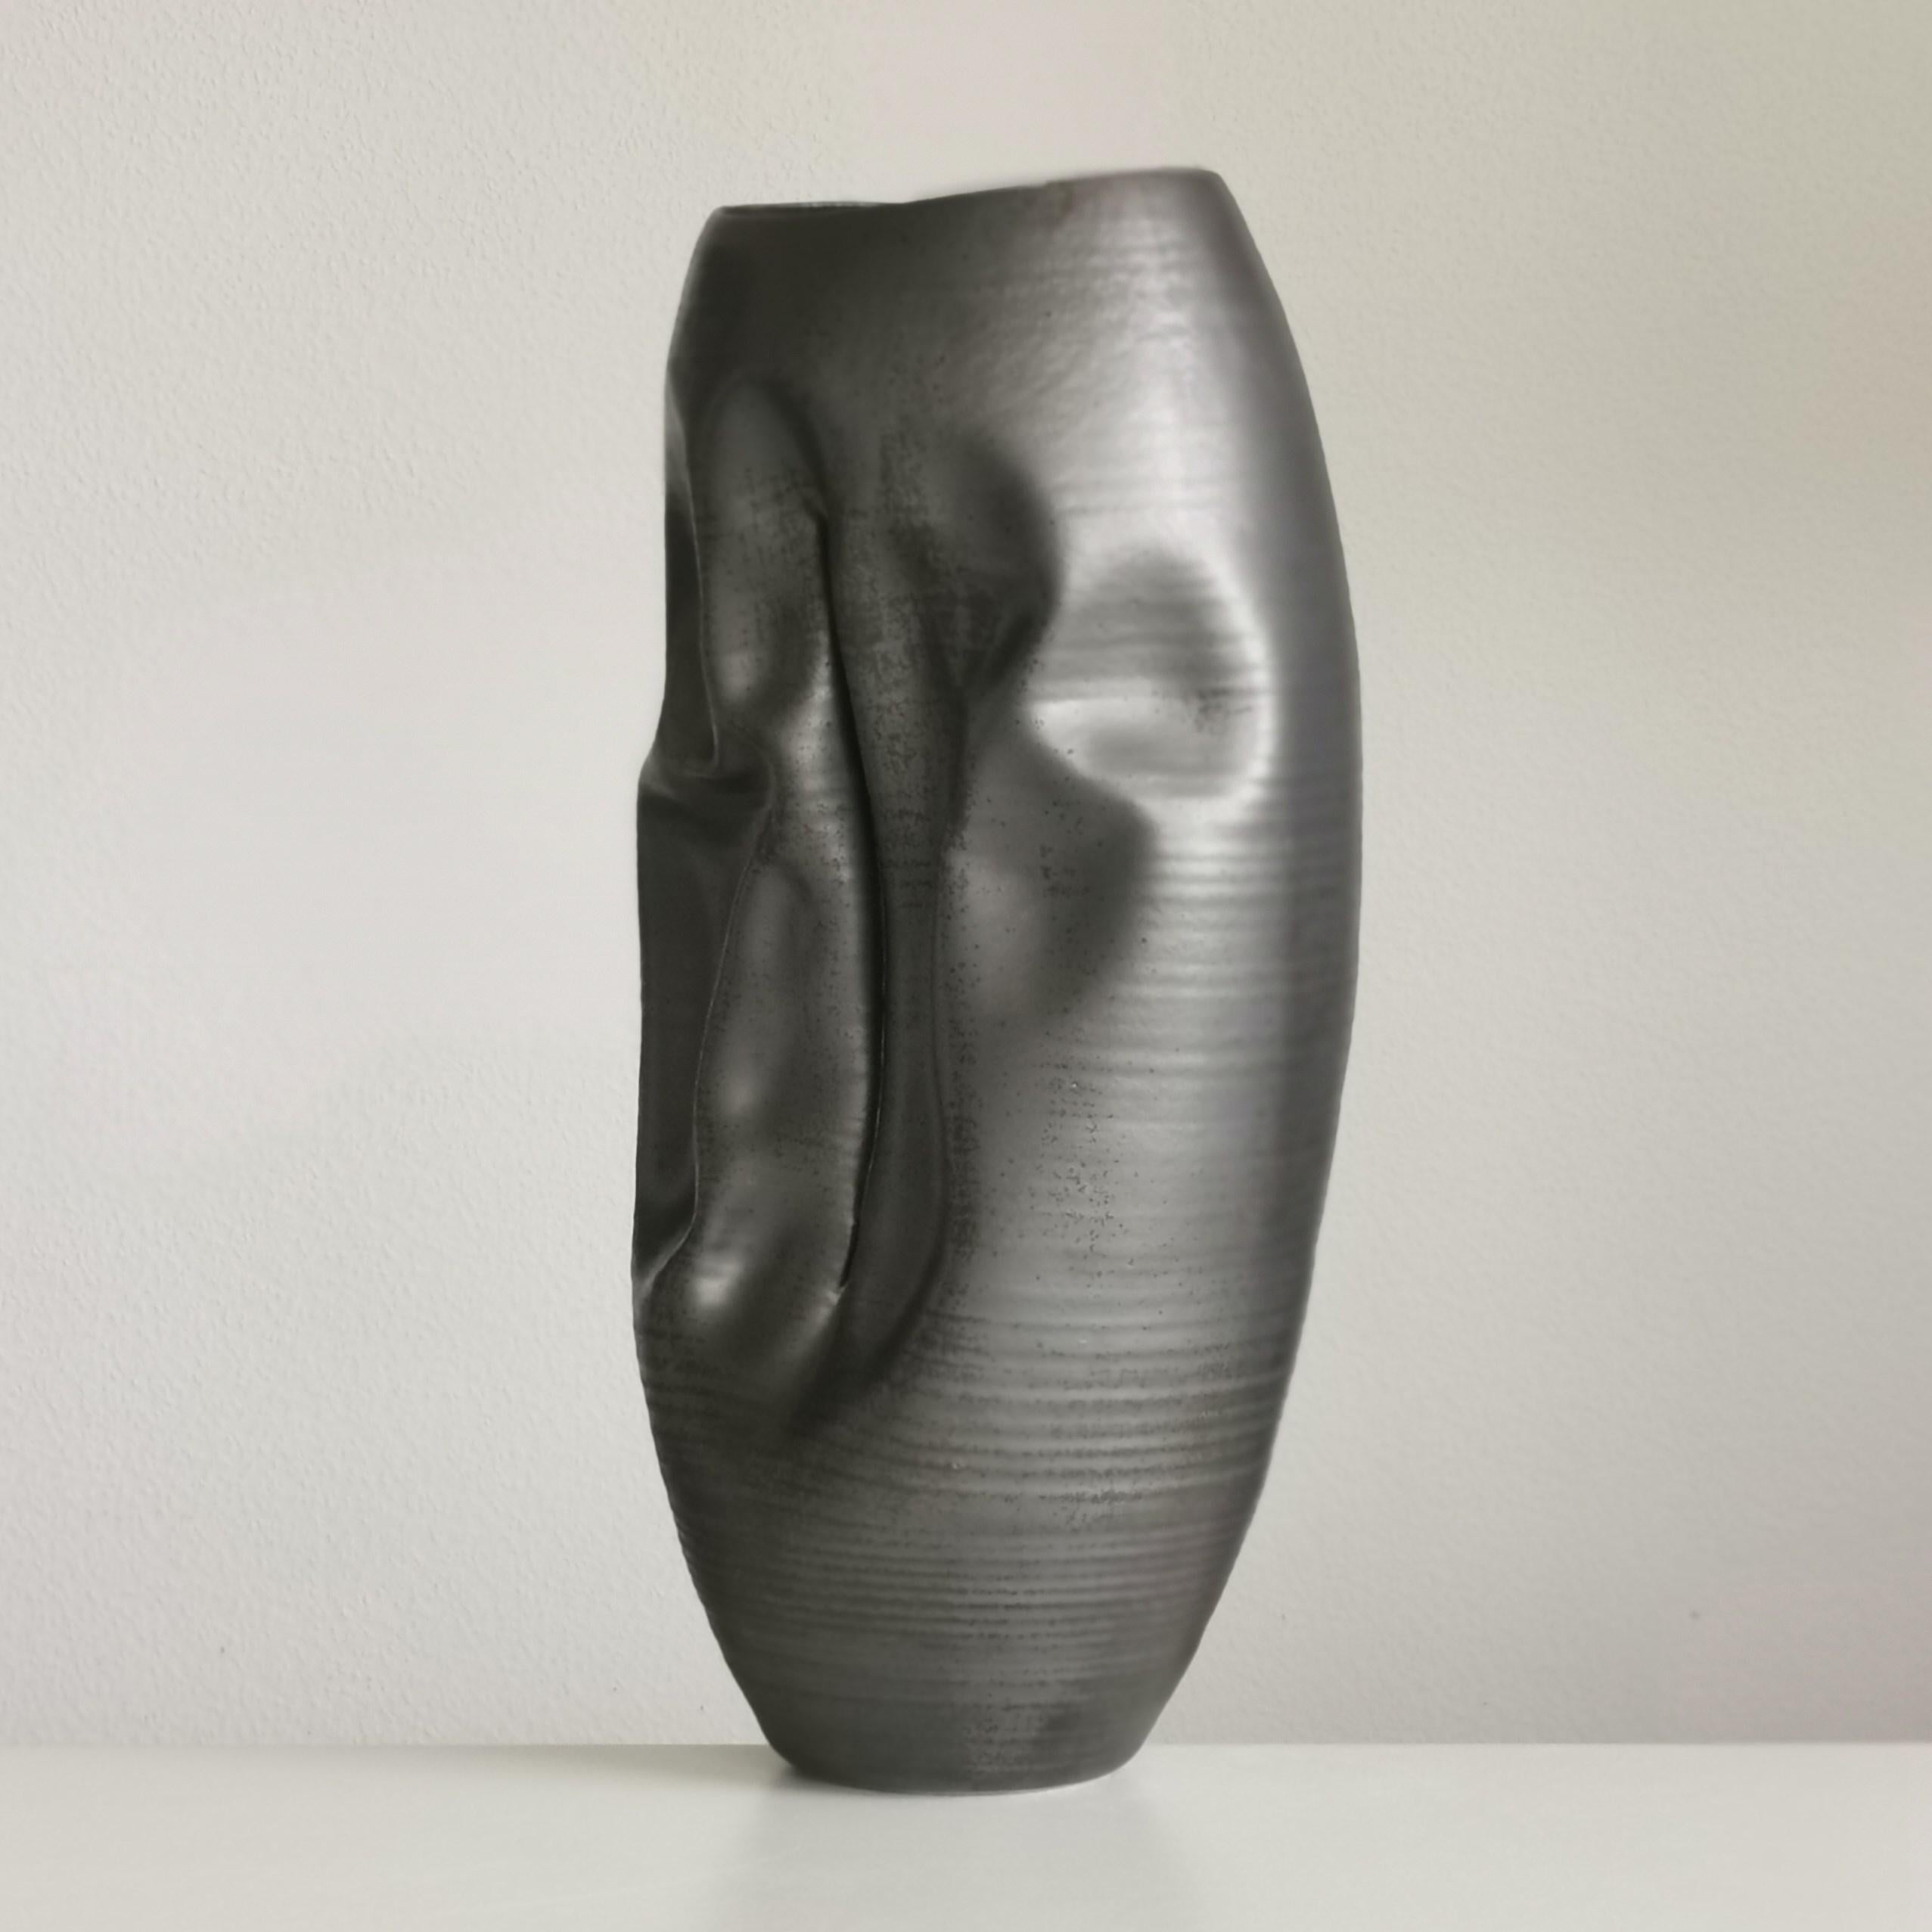 Undulating Crumpled Form No 70, a Ceramic Vessel by Nicholas Arroyave-Portela For Sale 1